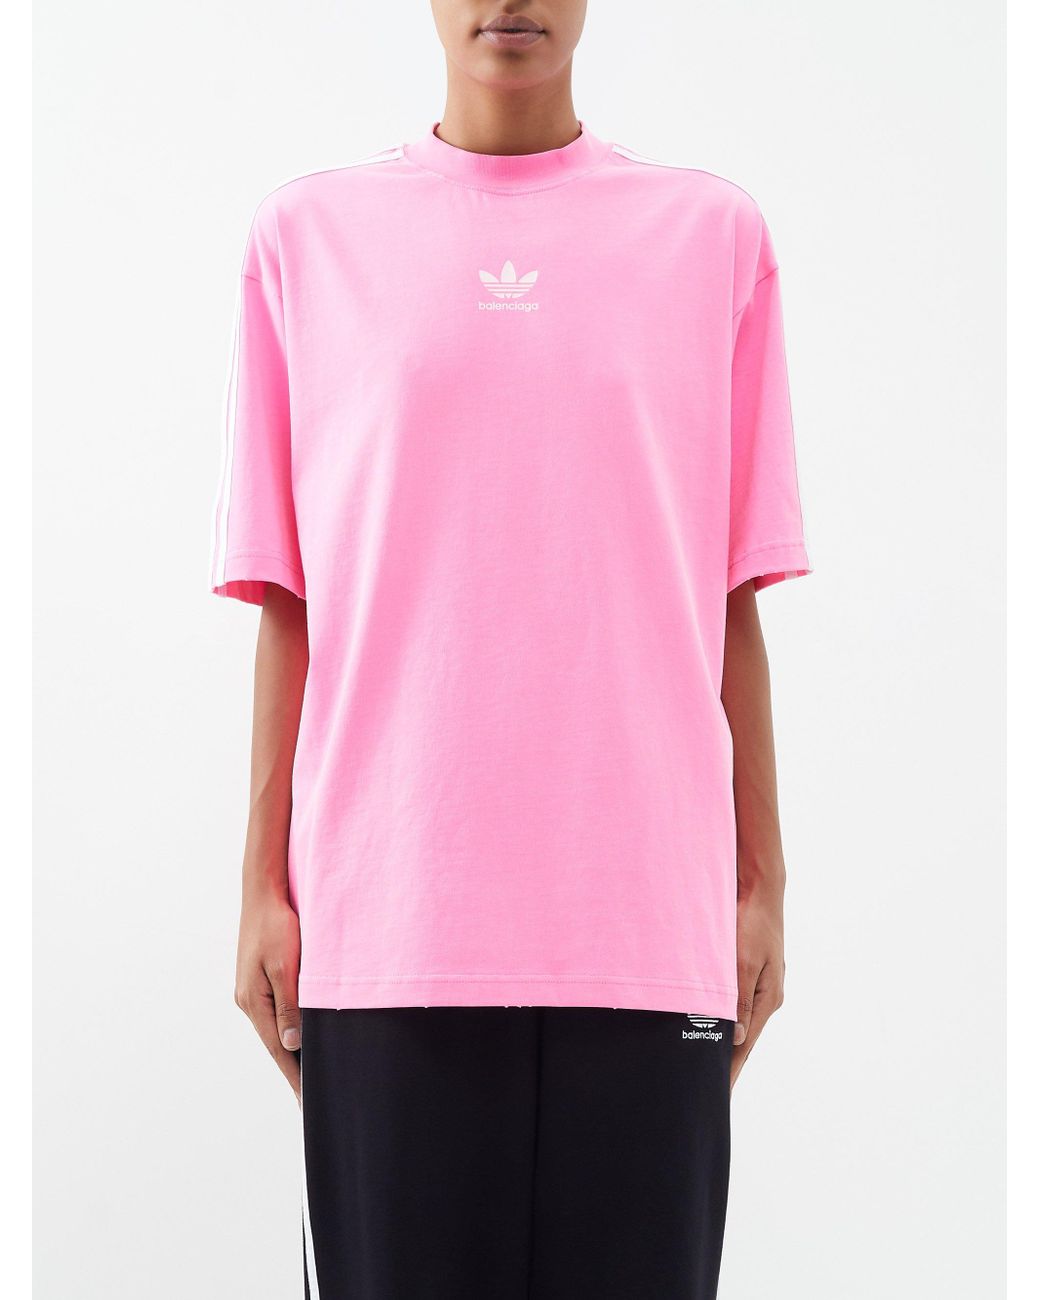 Balenciaga X Adidas Trefoil-logo Cotton-jersey T-shirt in Pink | Lyst